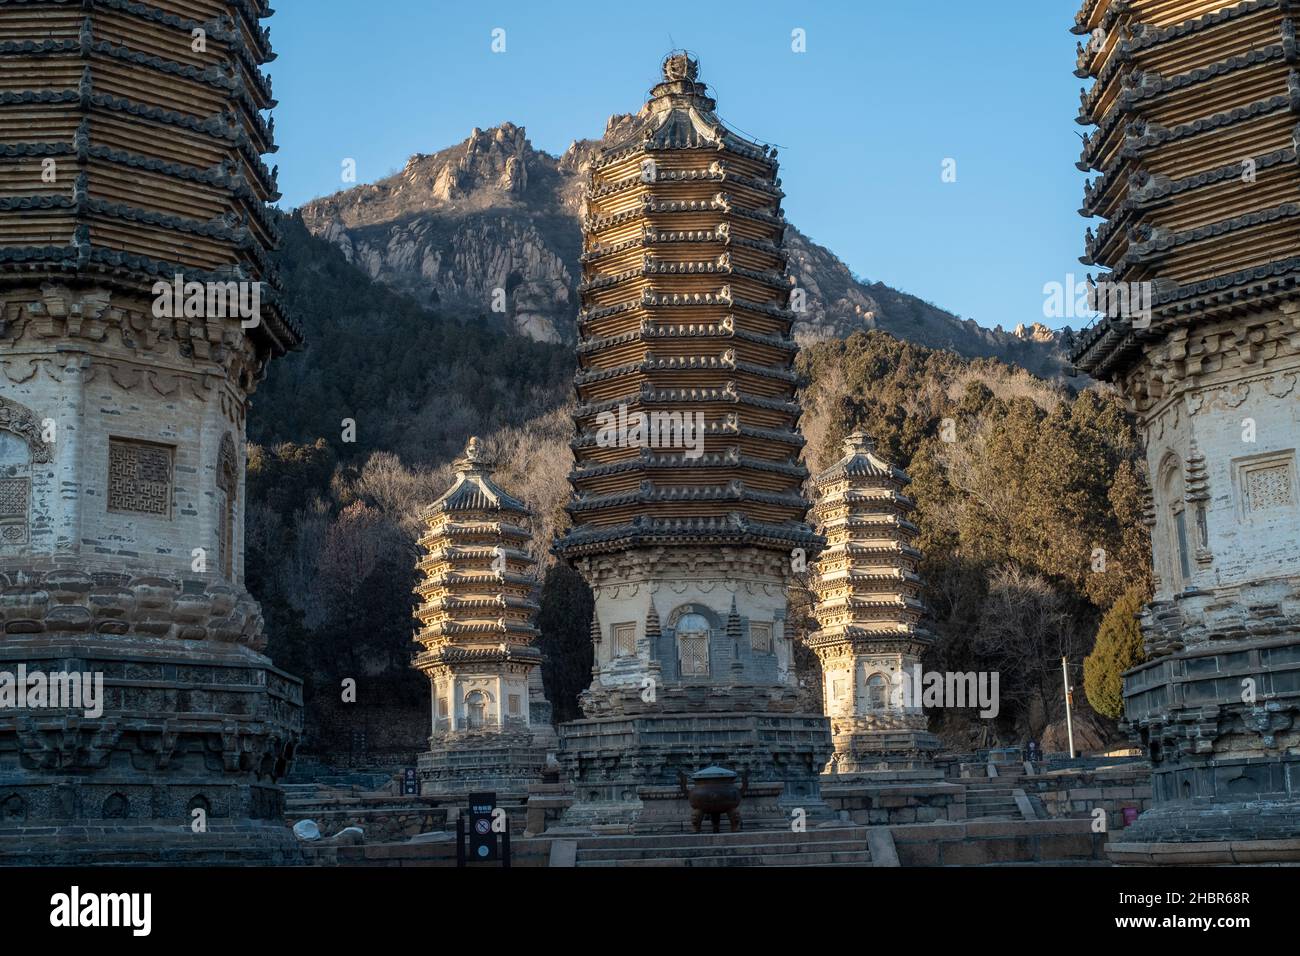 Yinshan Talin (parque de la pagoda de Yinshan) en la ciudad de Yanshou, distrito de Changping, Beijing, China. Foto de stock